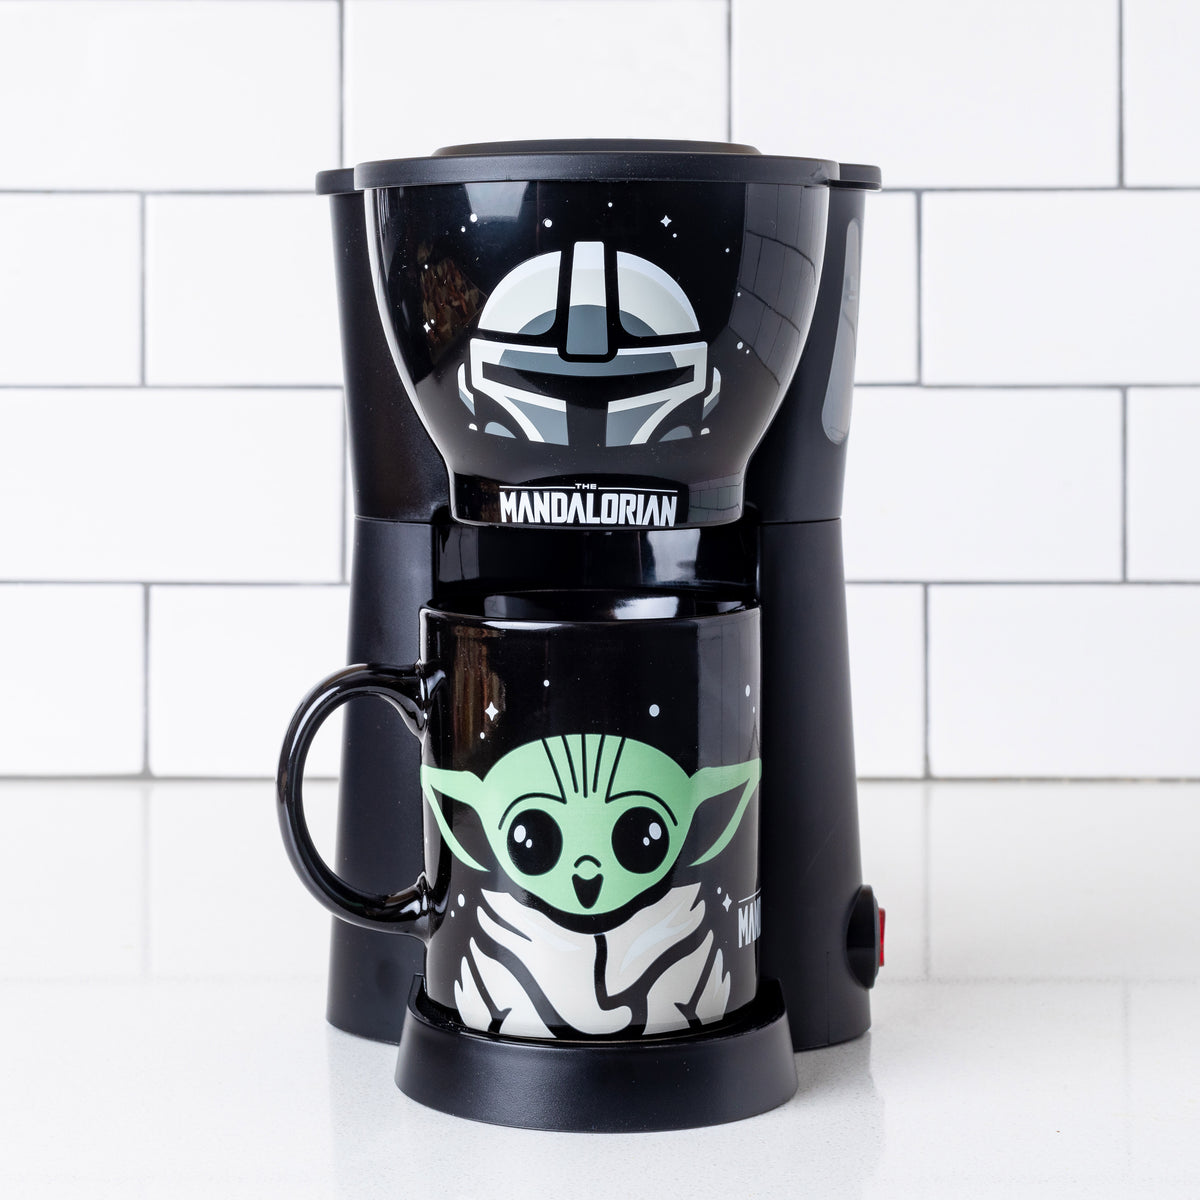 Star Wars The Mandalorian Coffee Maker Set